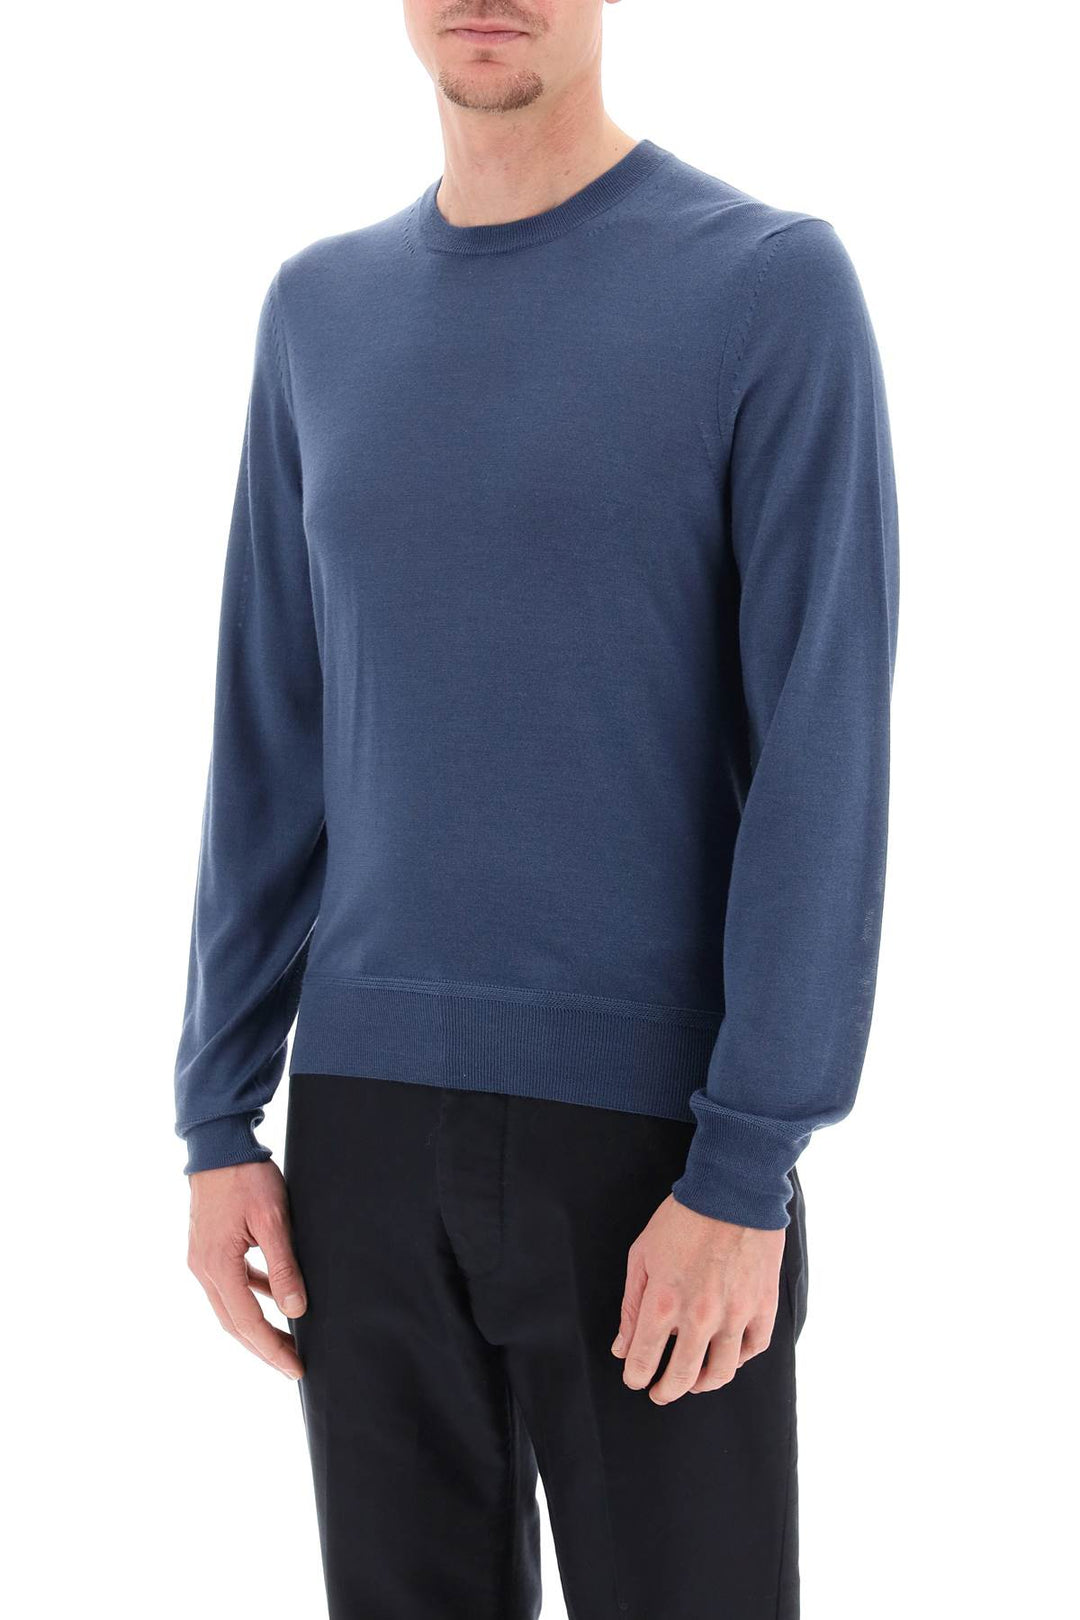 Tom Ford Light Silk Cashmere Sweater   Blu